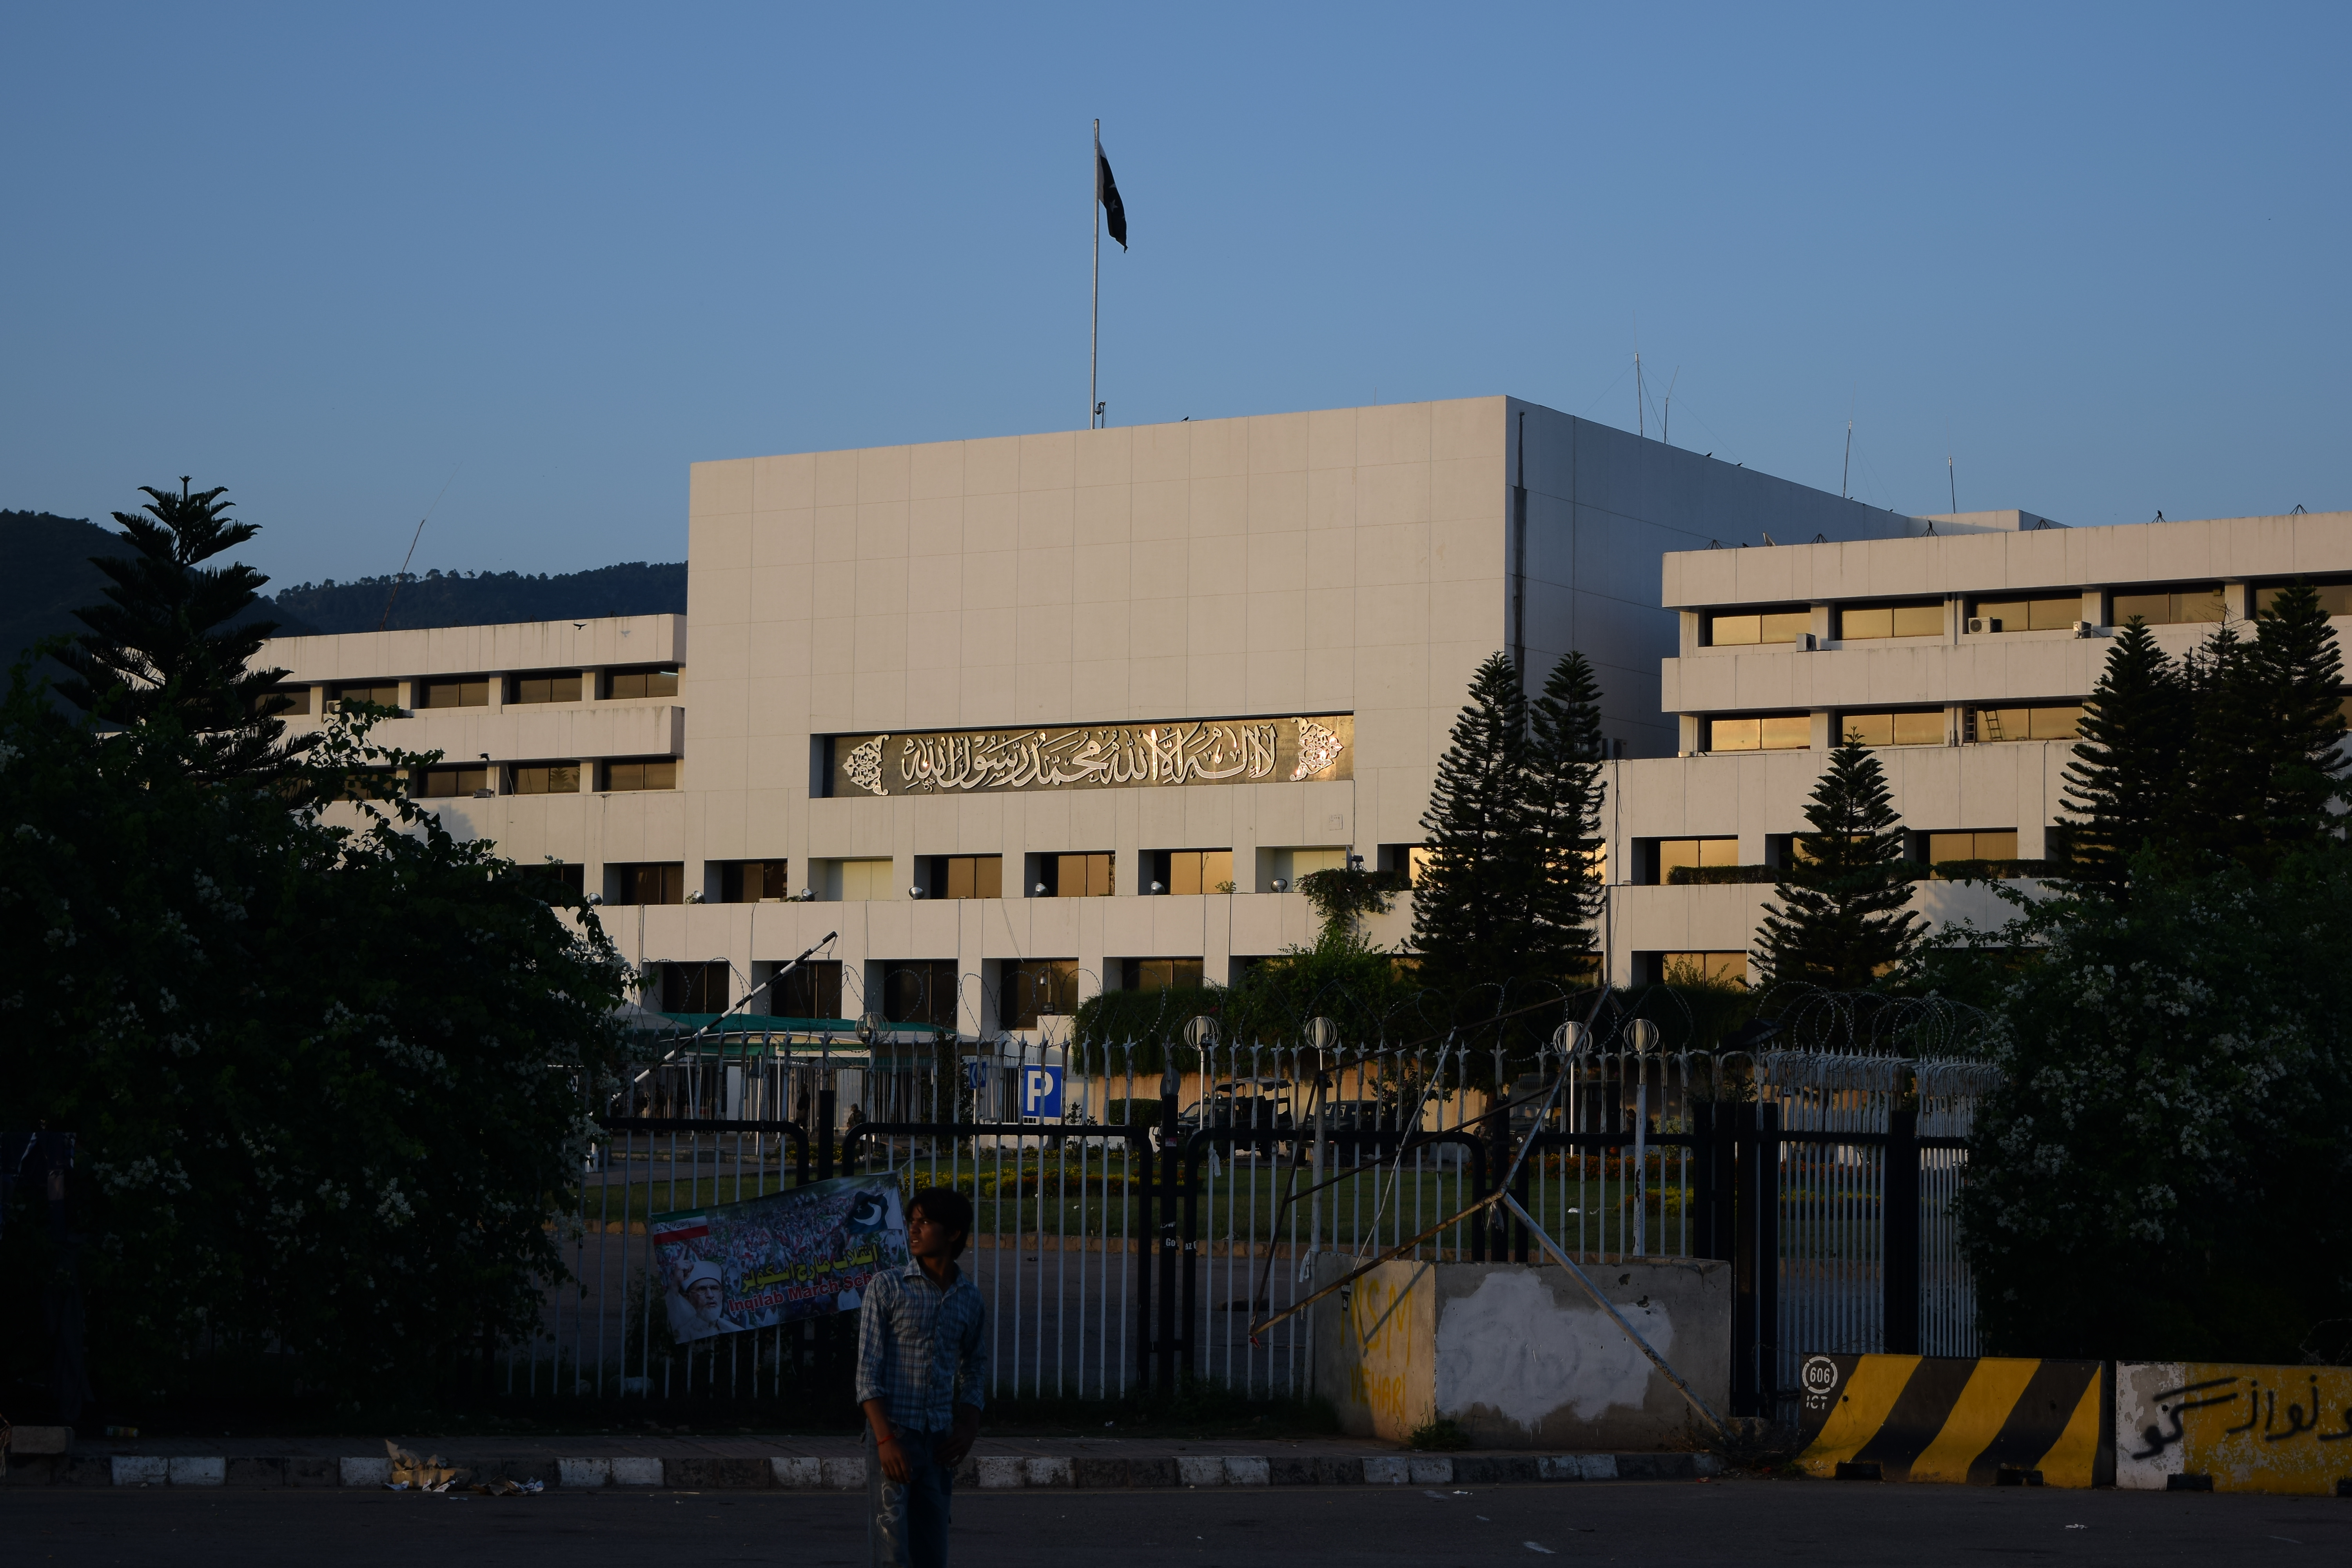 FileParliment House Building Islamabad PakistanJPG Wikimedia